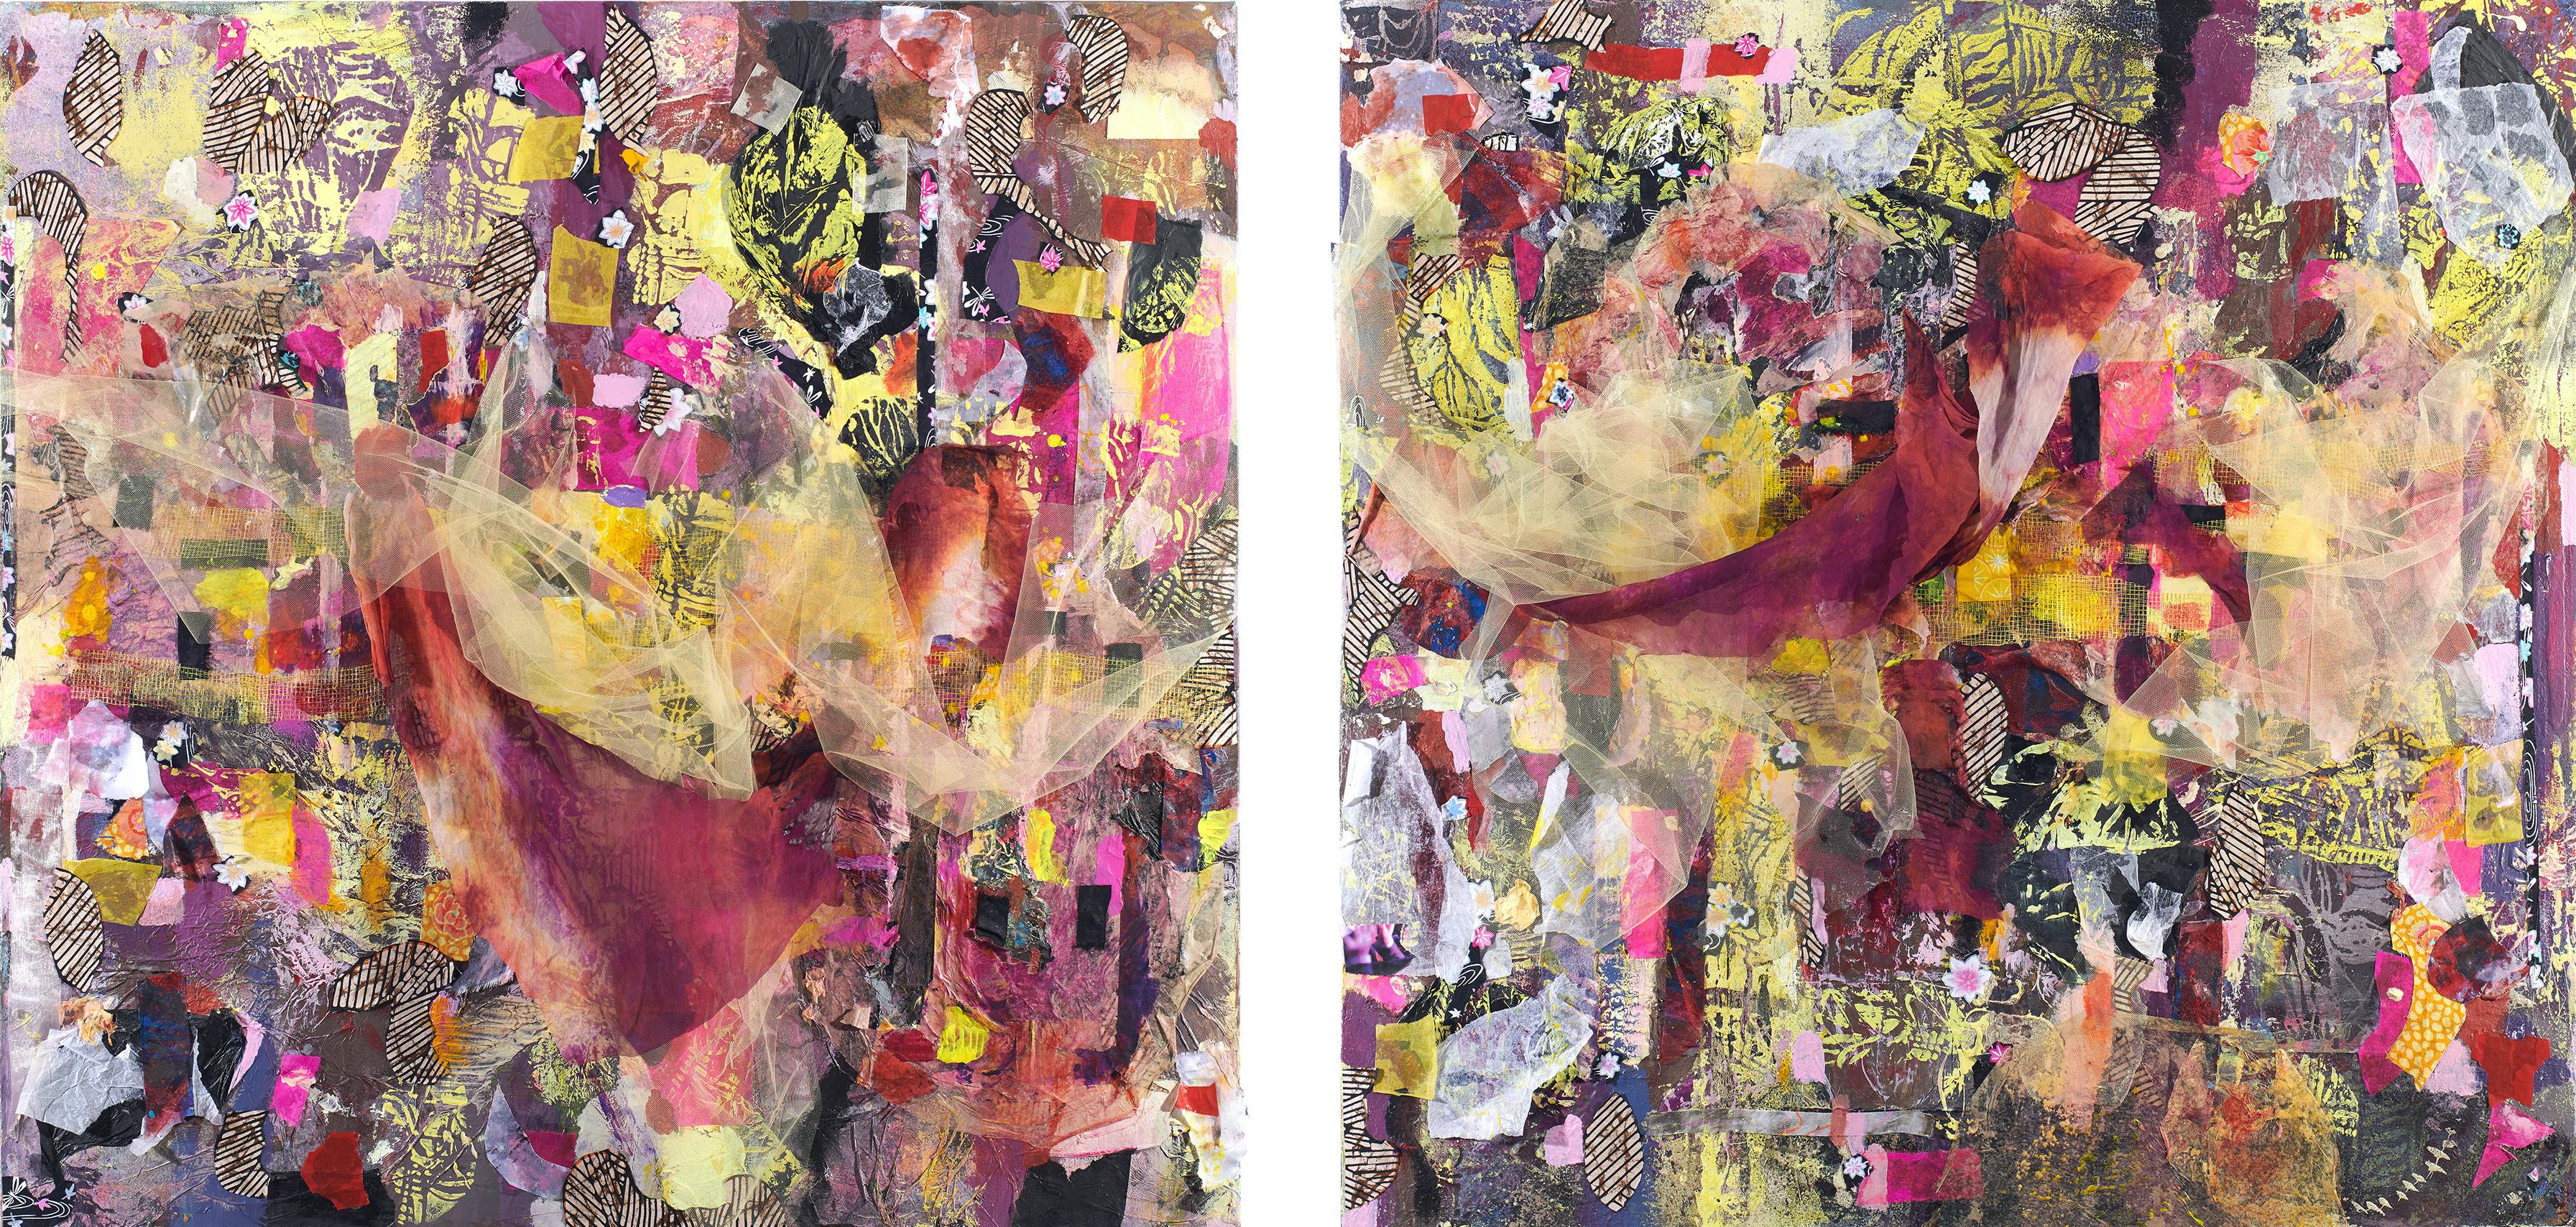 Information Overchoice - Eye Catching Mixed Media Diptych Black + Pink + Yellow - Mixed Media Art by Jennifer Blalack